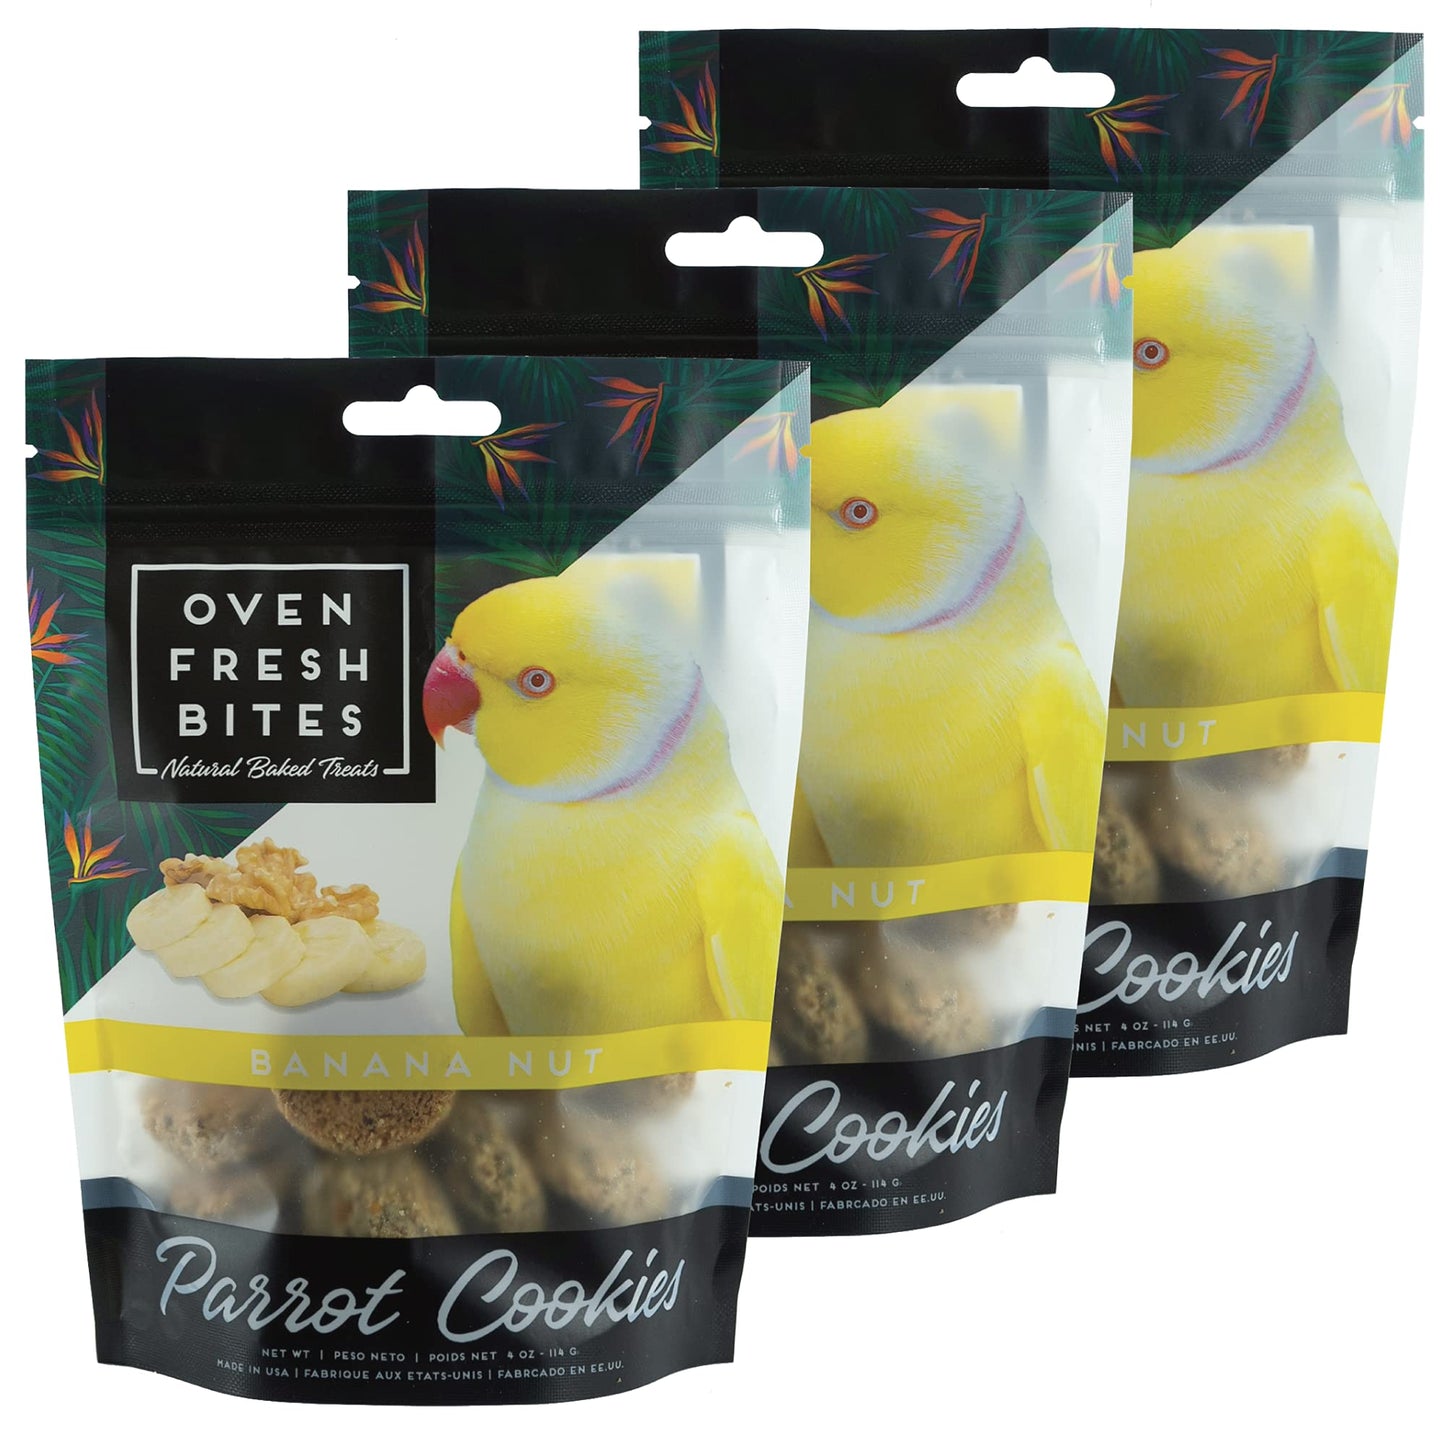 Oven-Fresh-Bites-Parrot-Cookies-3-Pack-Banana-Nut